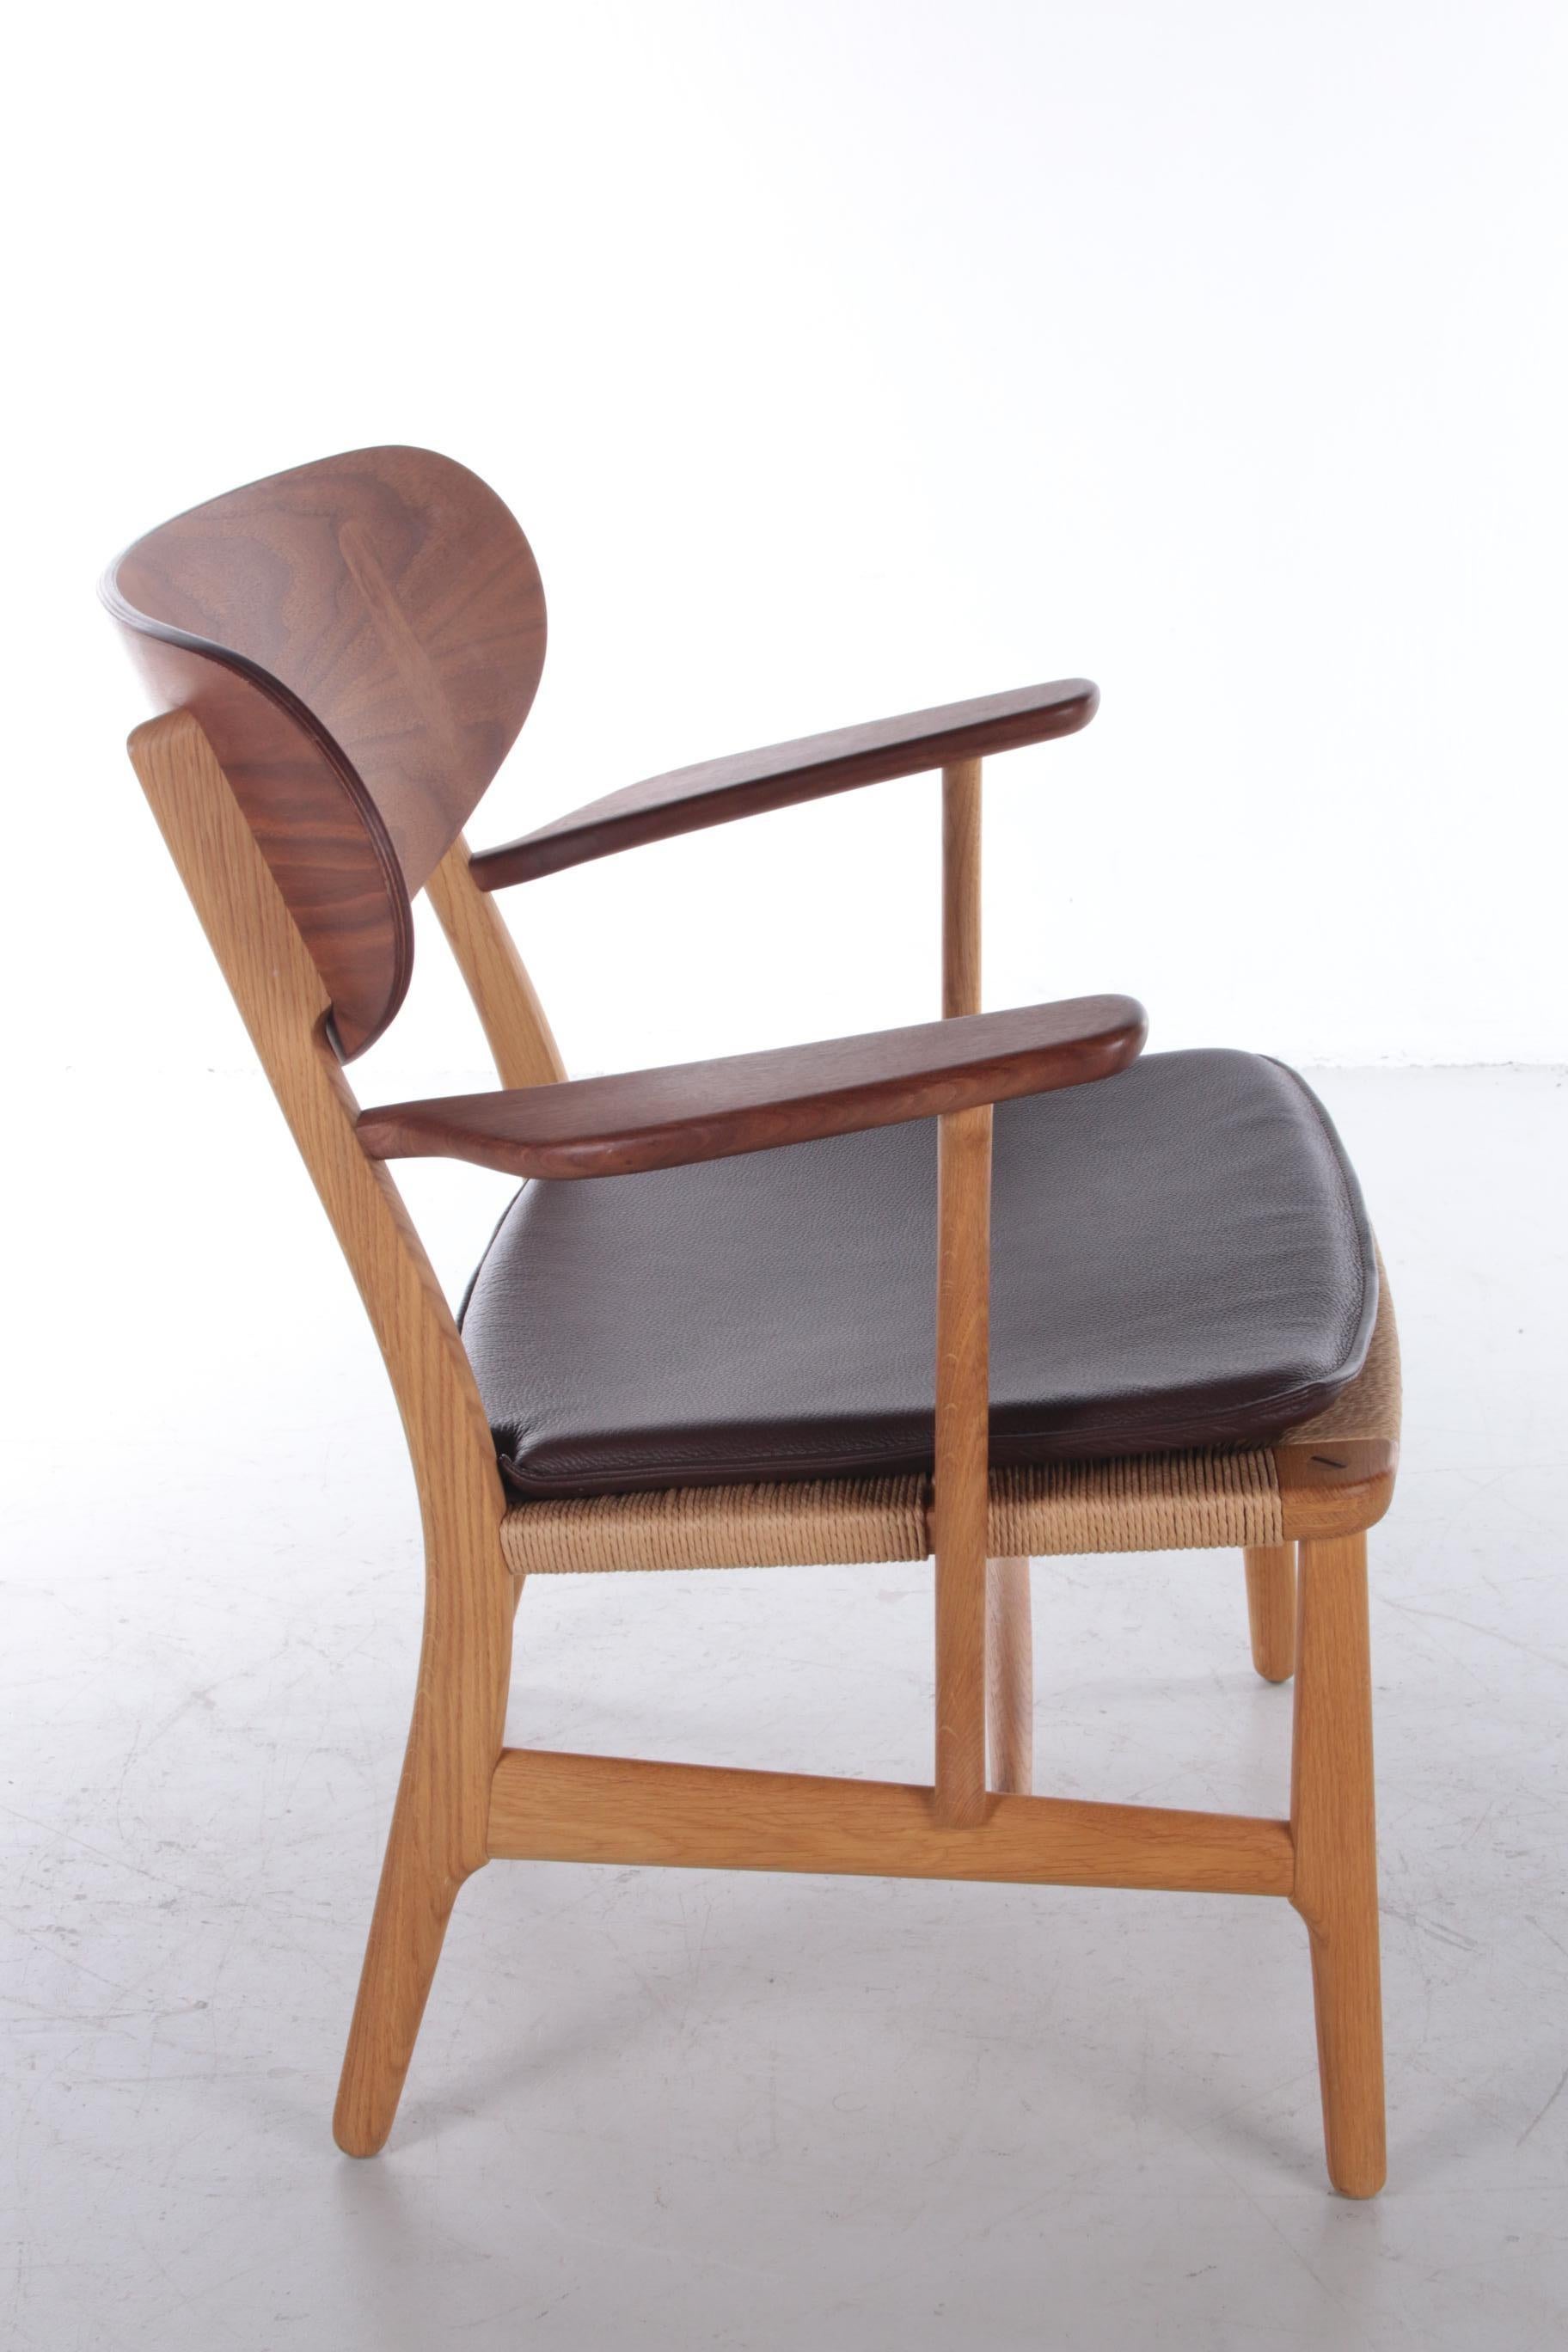 Model Ch22 Lounge Chair by Hans J. Wegner for Carl Hansen & Søn 1